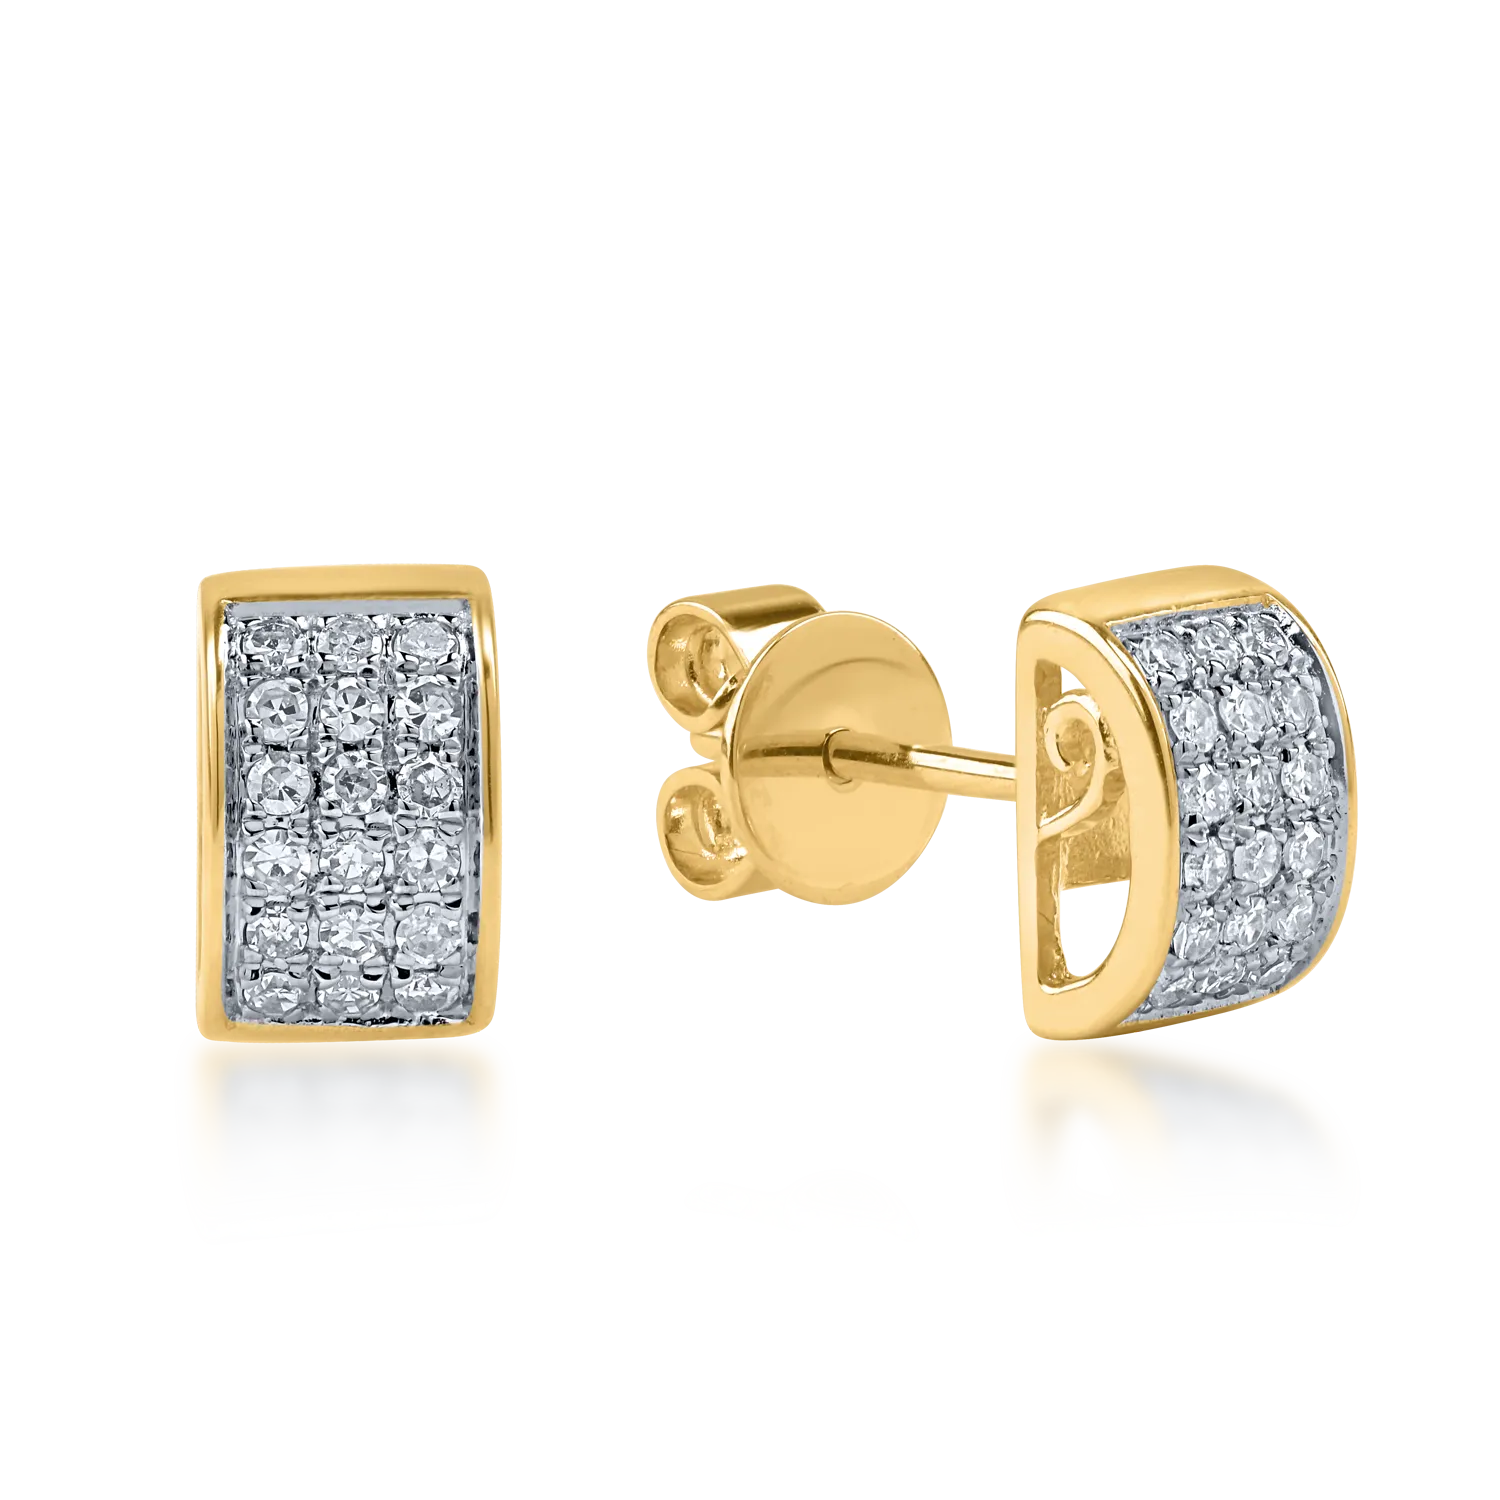 Yellow gold stud earrings with 0.137ct diamonds